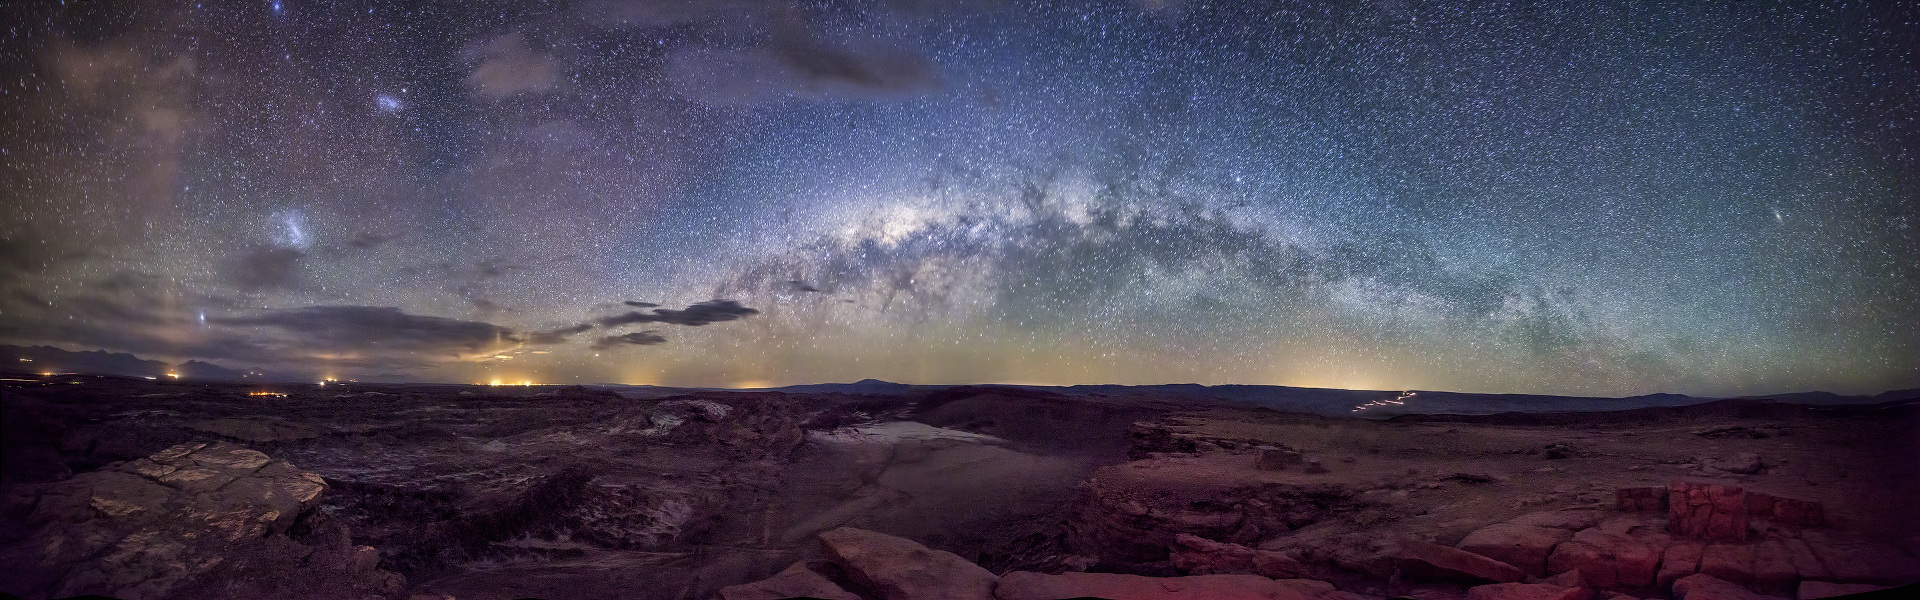 Milky-Way-over-Moon-Valley-600px-by-Rafael-Defavari.jpg